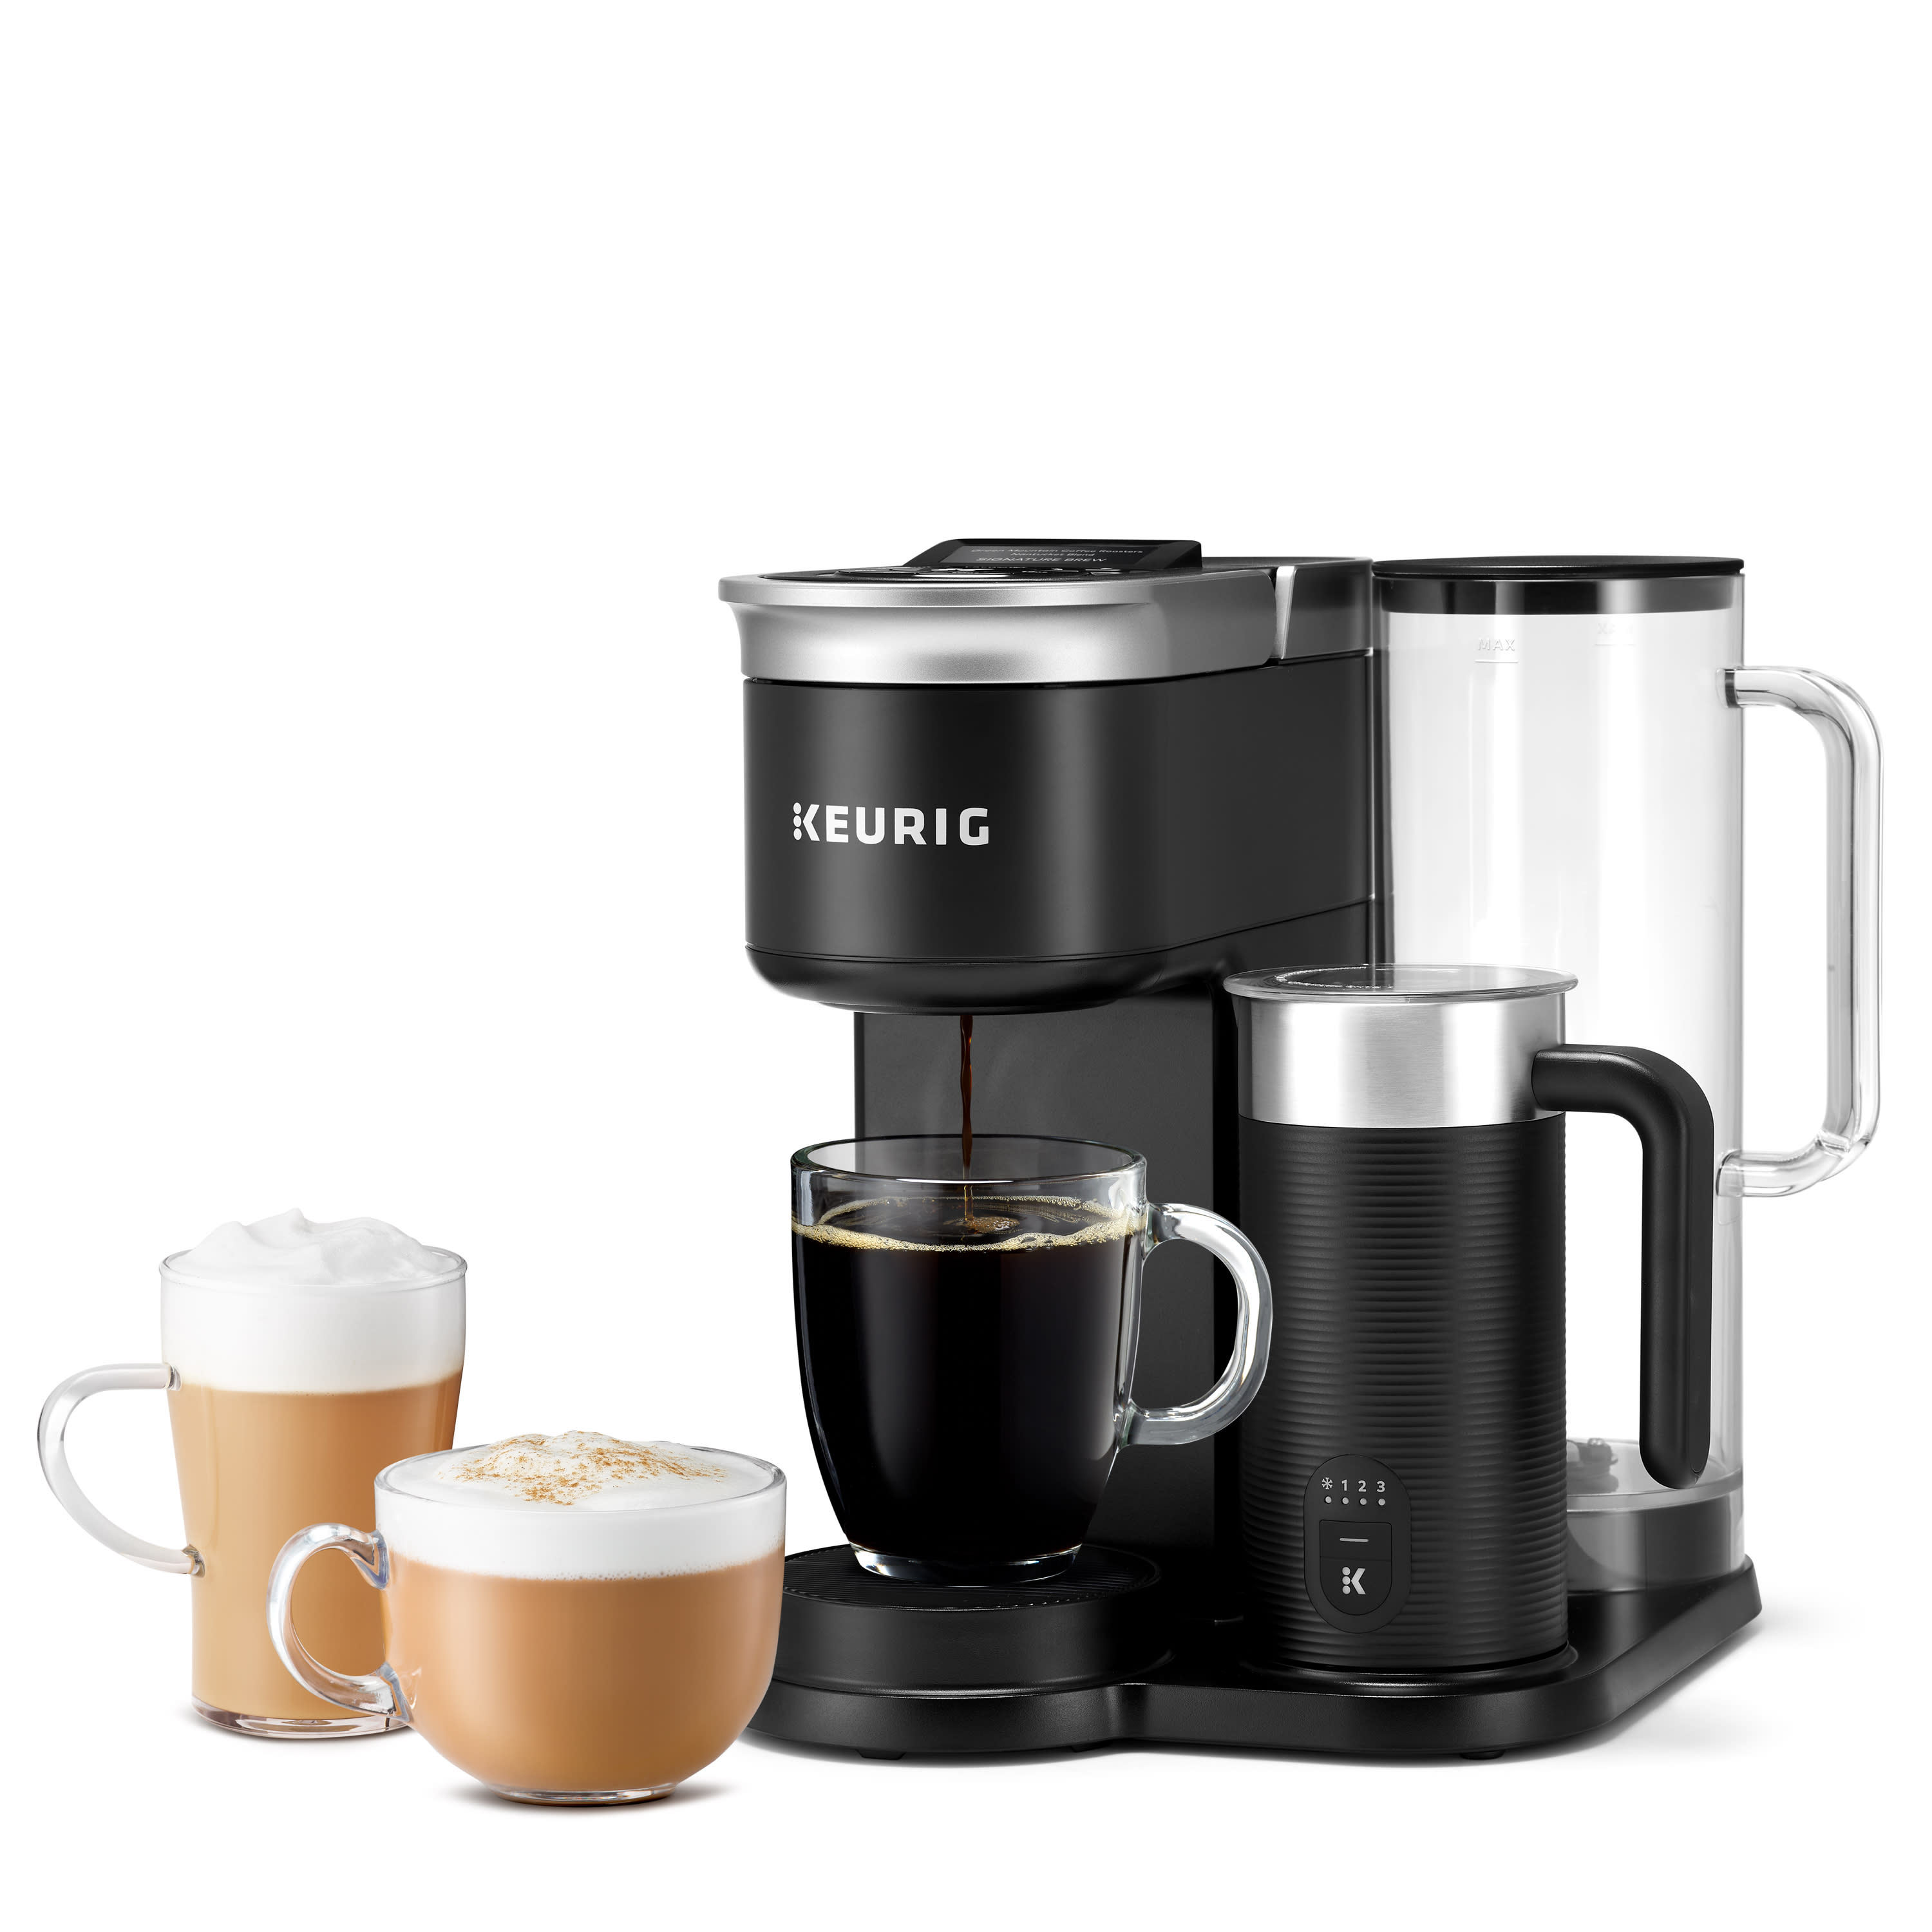 https://cdn.apartmenttherapy.info/image/upload/v1664216503/gen-workflow/product-database/keurig-k-cafe-smart-coffee-maker.jpg